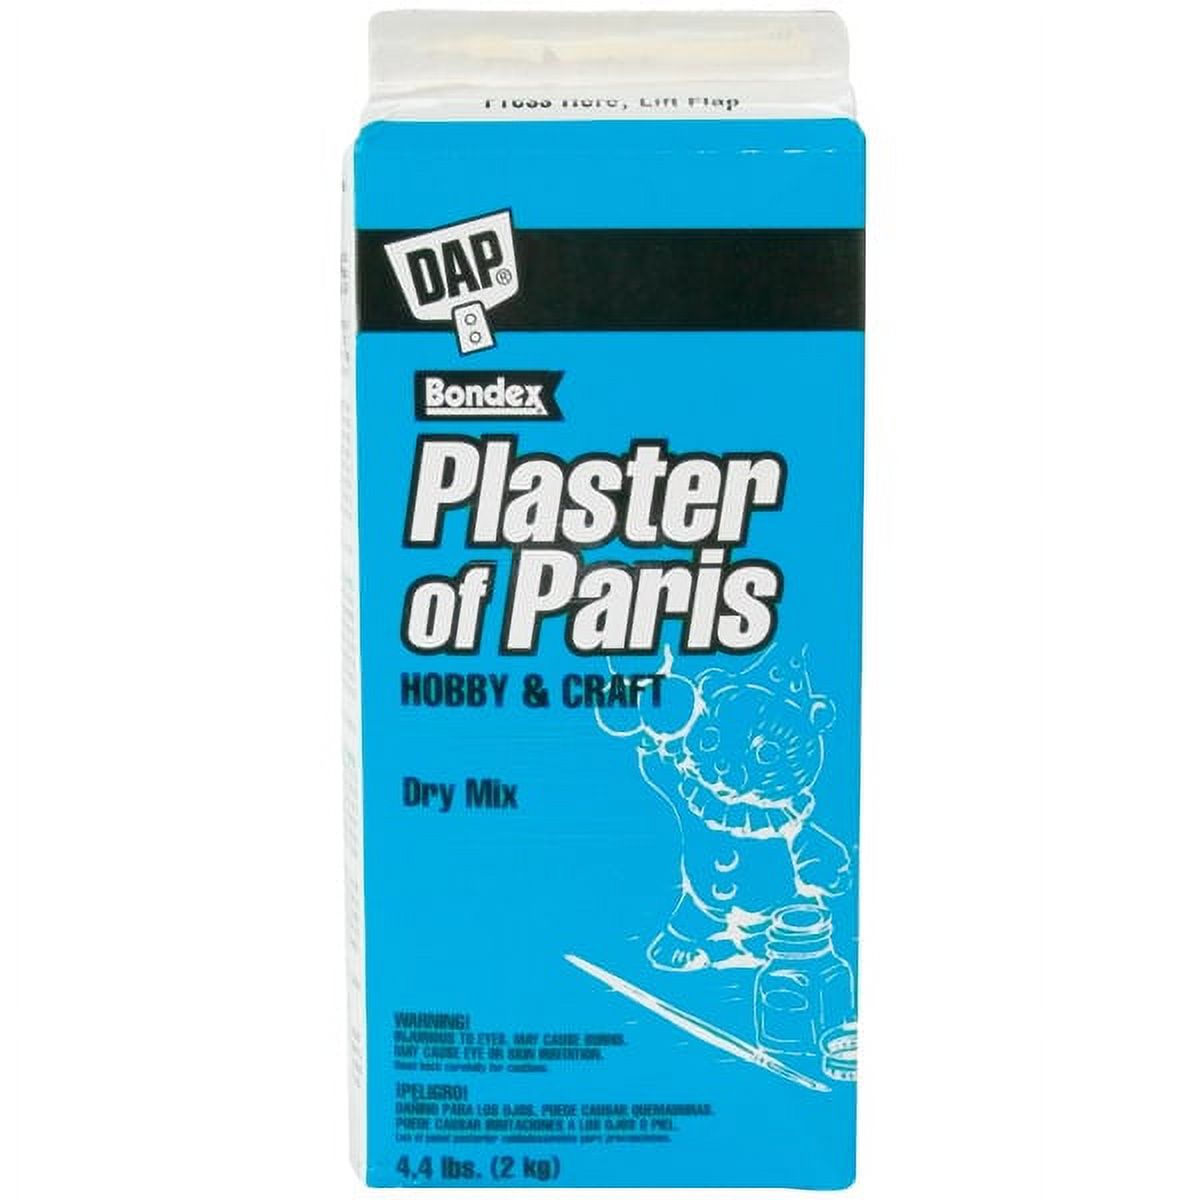 DAP Plaster of Paris Dry Mix 4.4lb Box - image 2 of 2